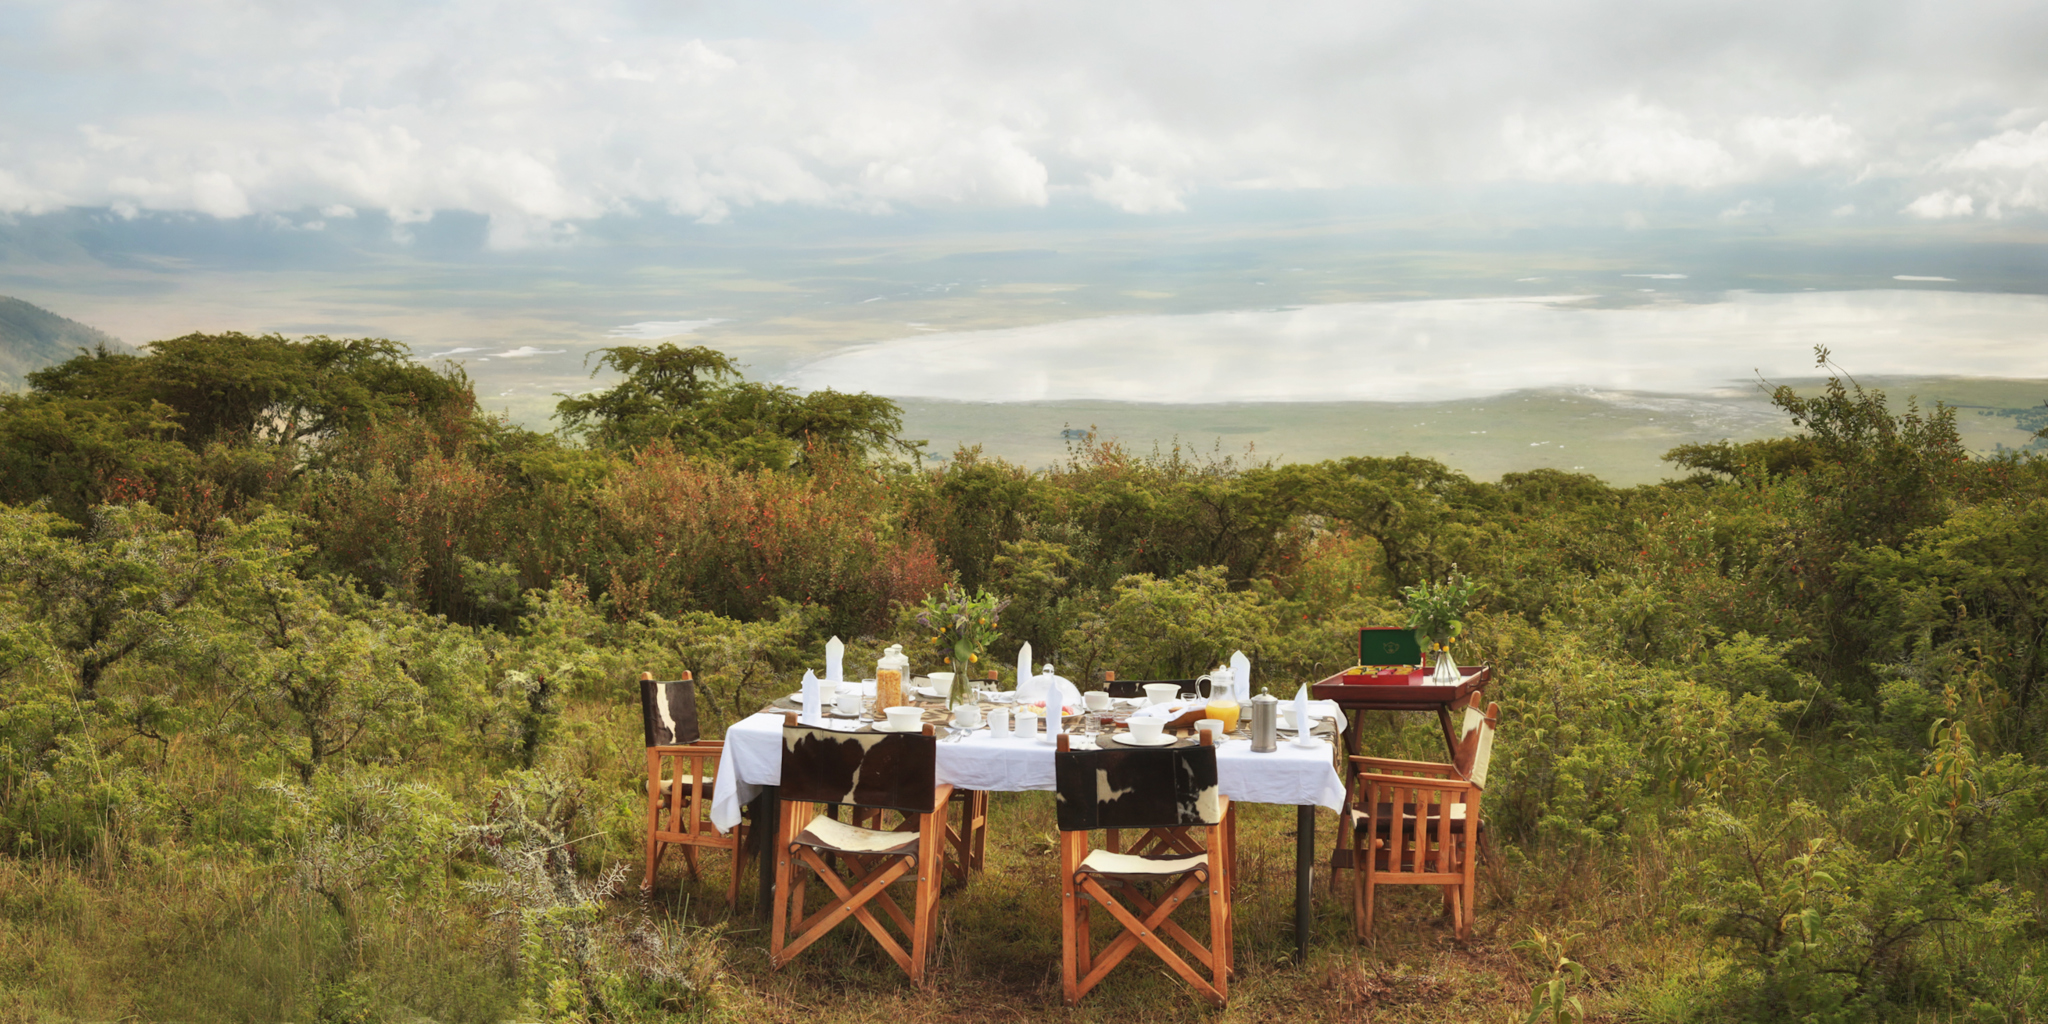 Dining at Ngorongoro crater